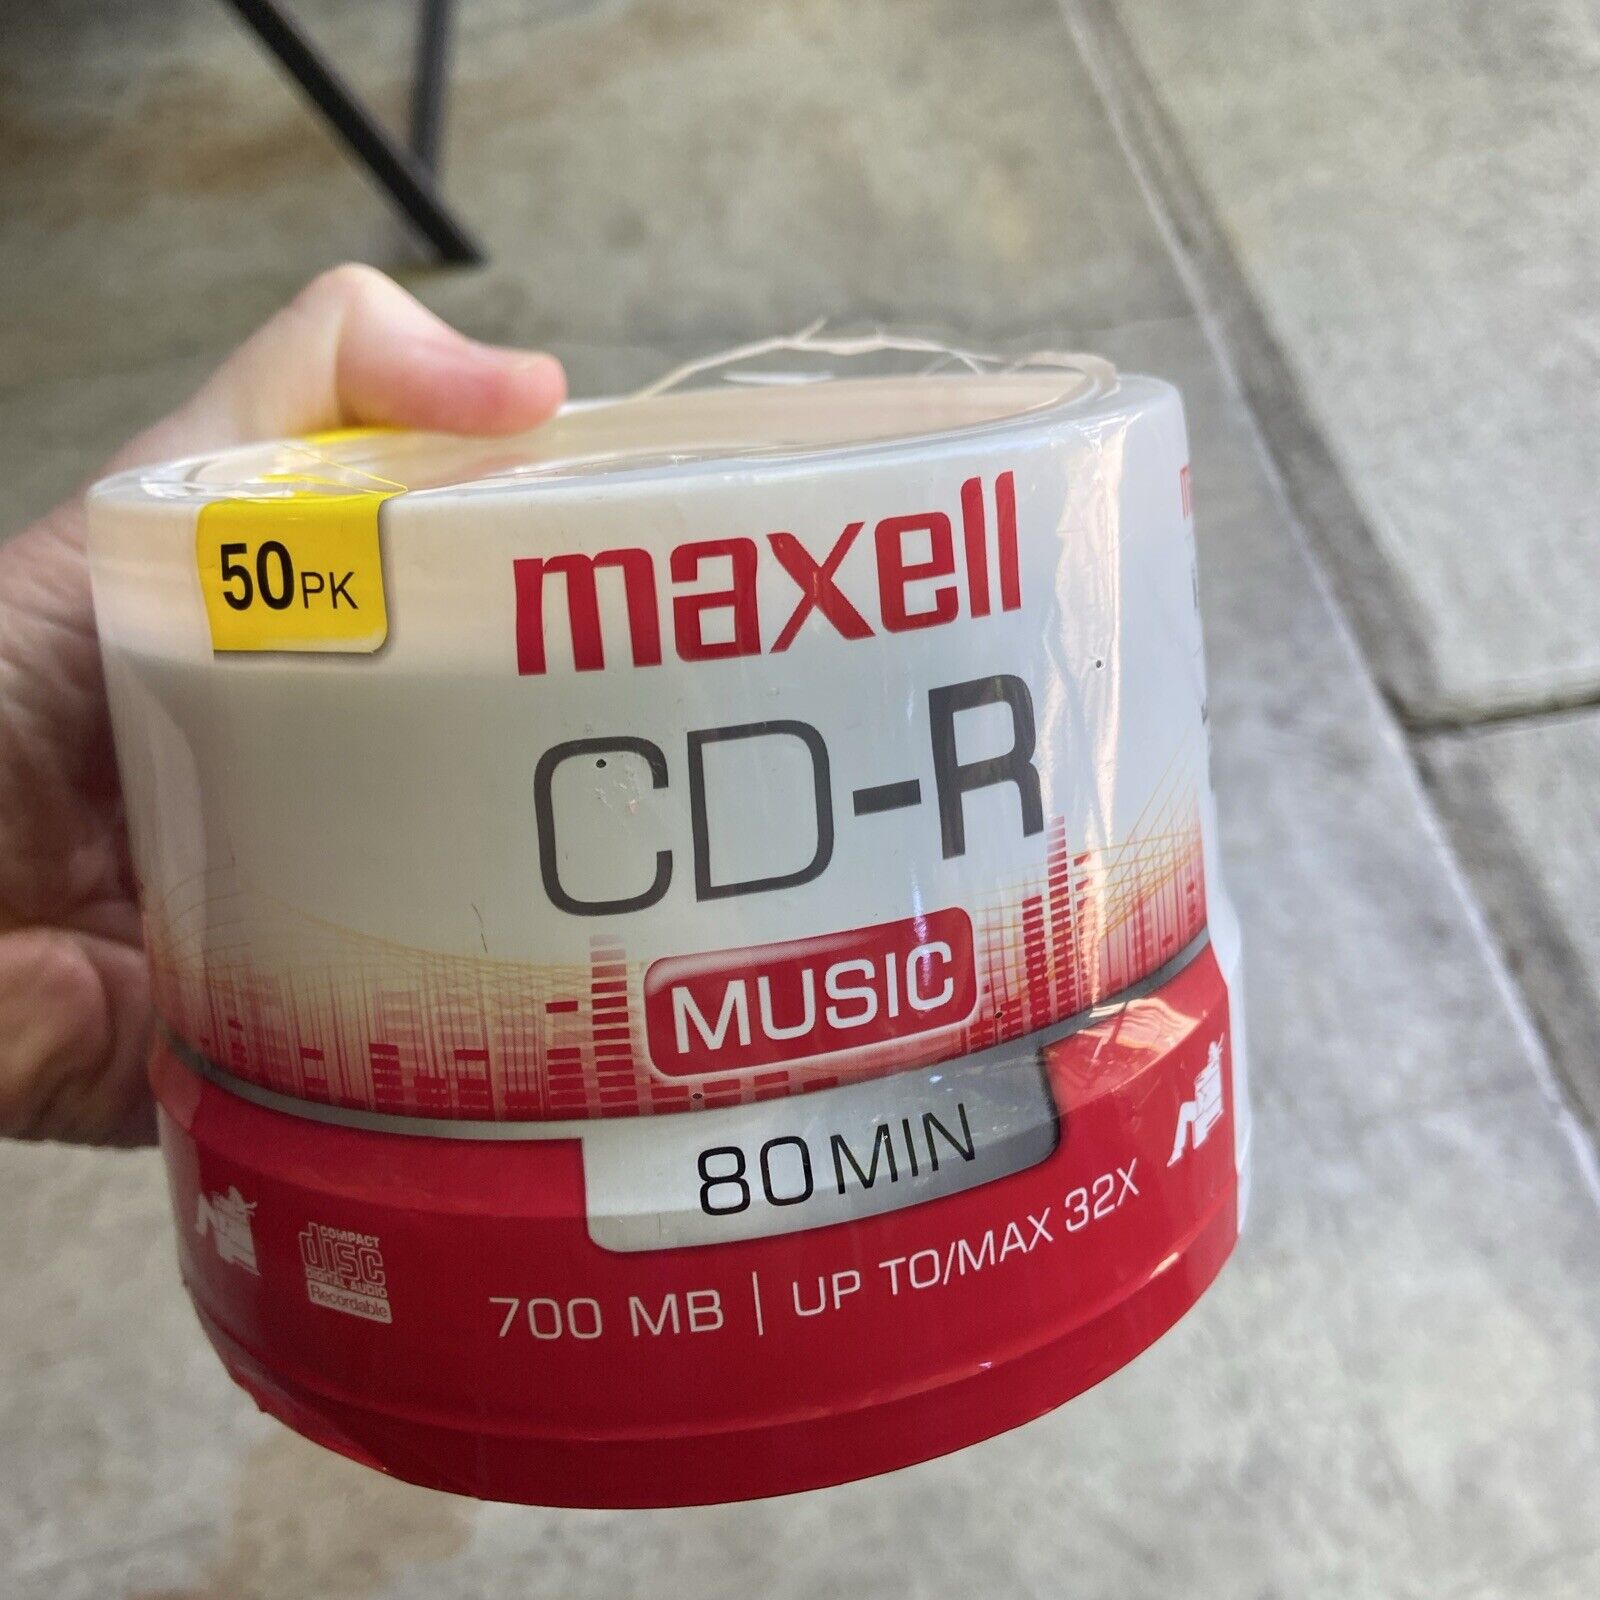 Maxell CD-R Music - 80 MIN - 700 MB / 32X / New 50 Pack